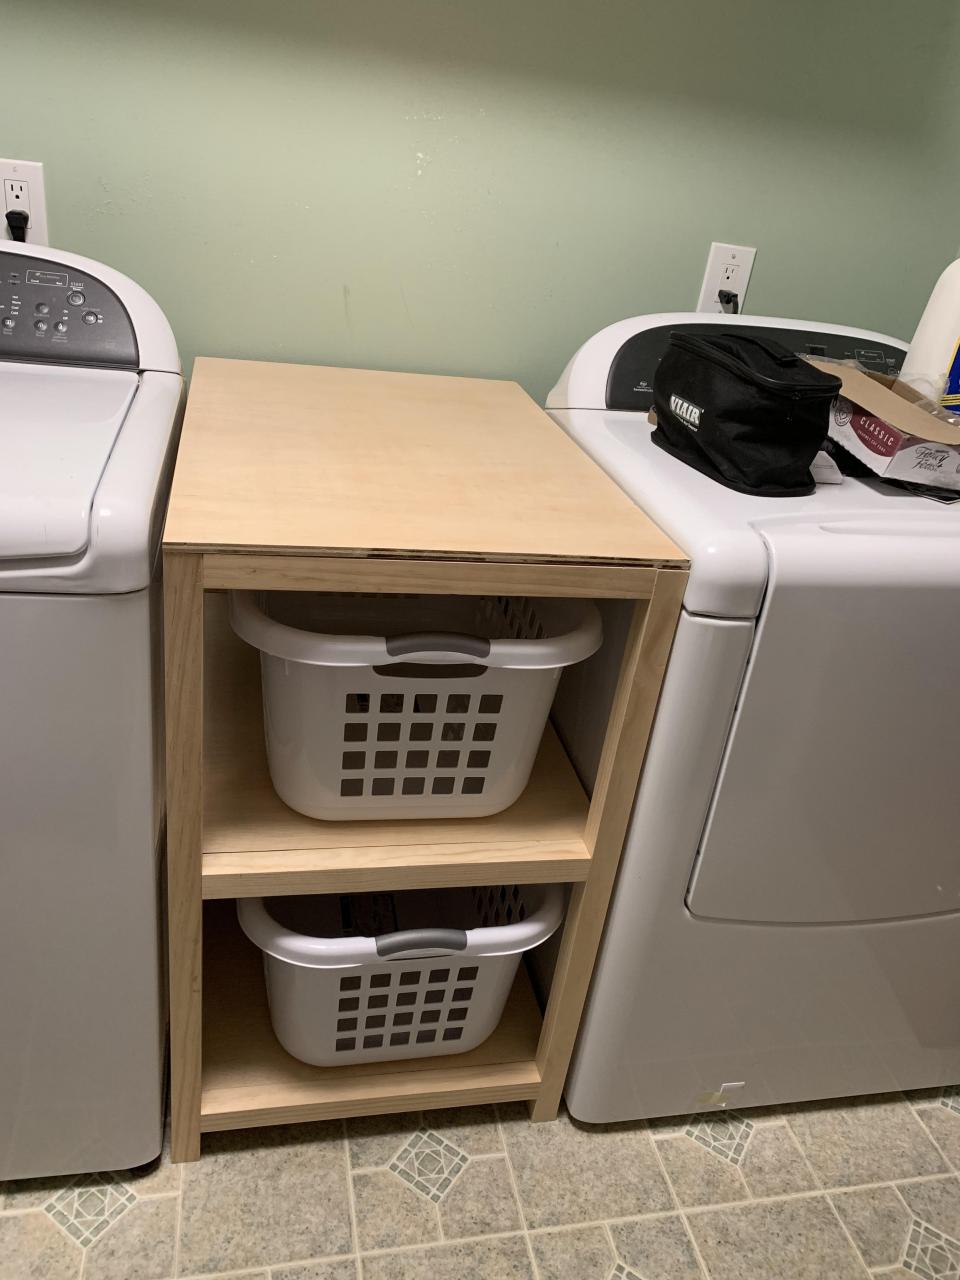 Build custom shelves for our laundry room r/somethingimade